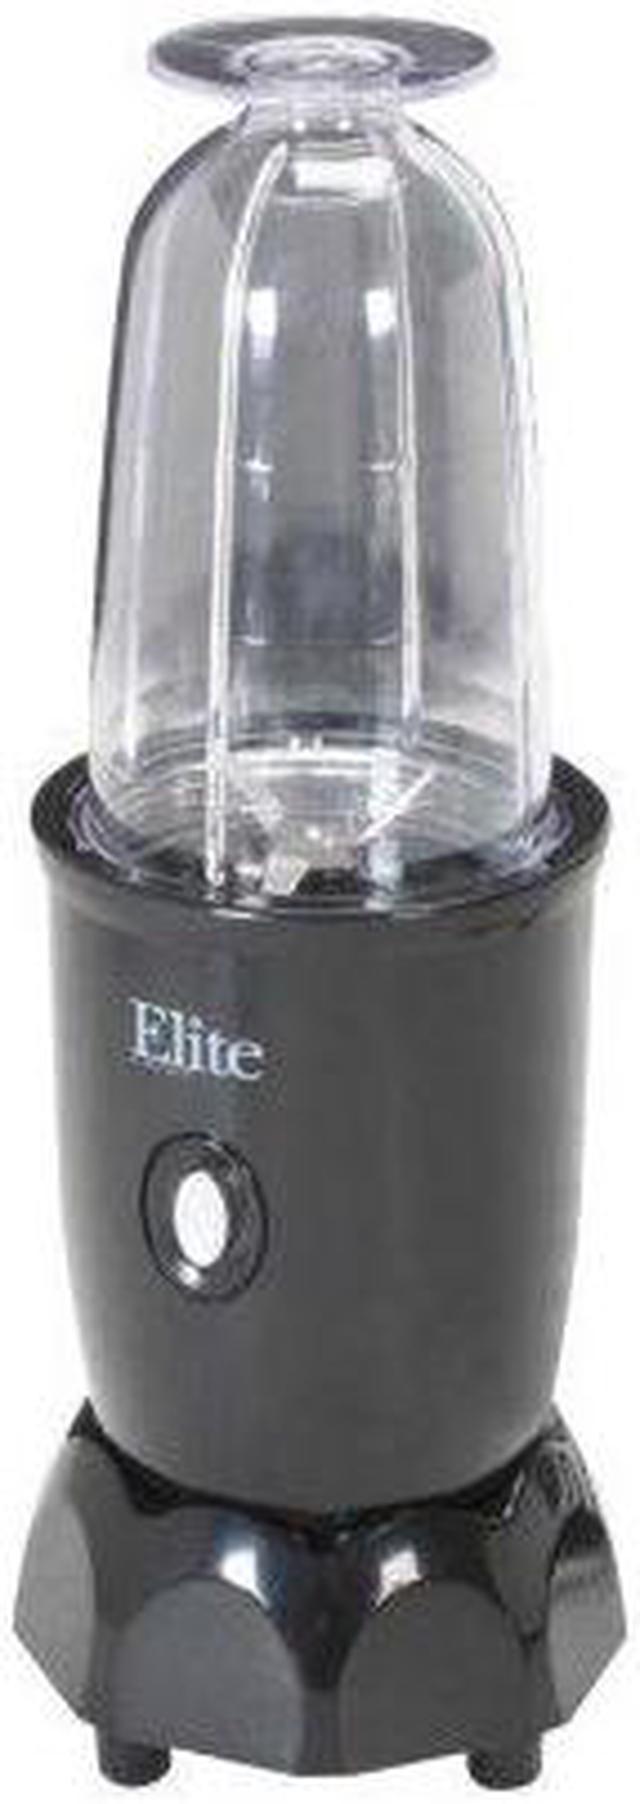 Elite Cuisine 17-Piece Personal Drink Blender - Black